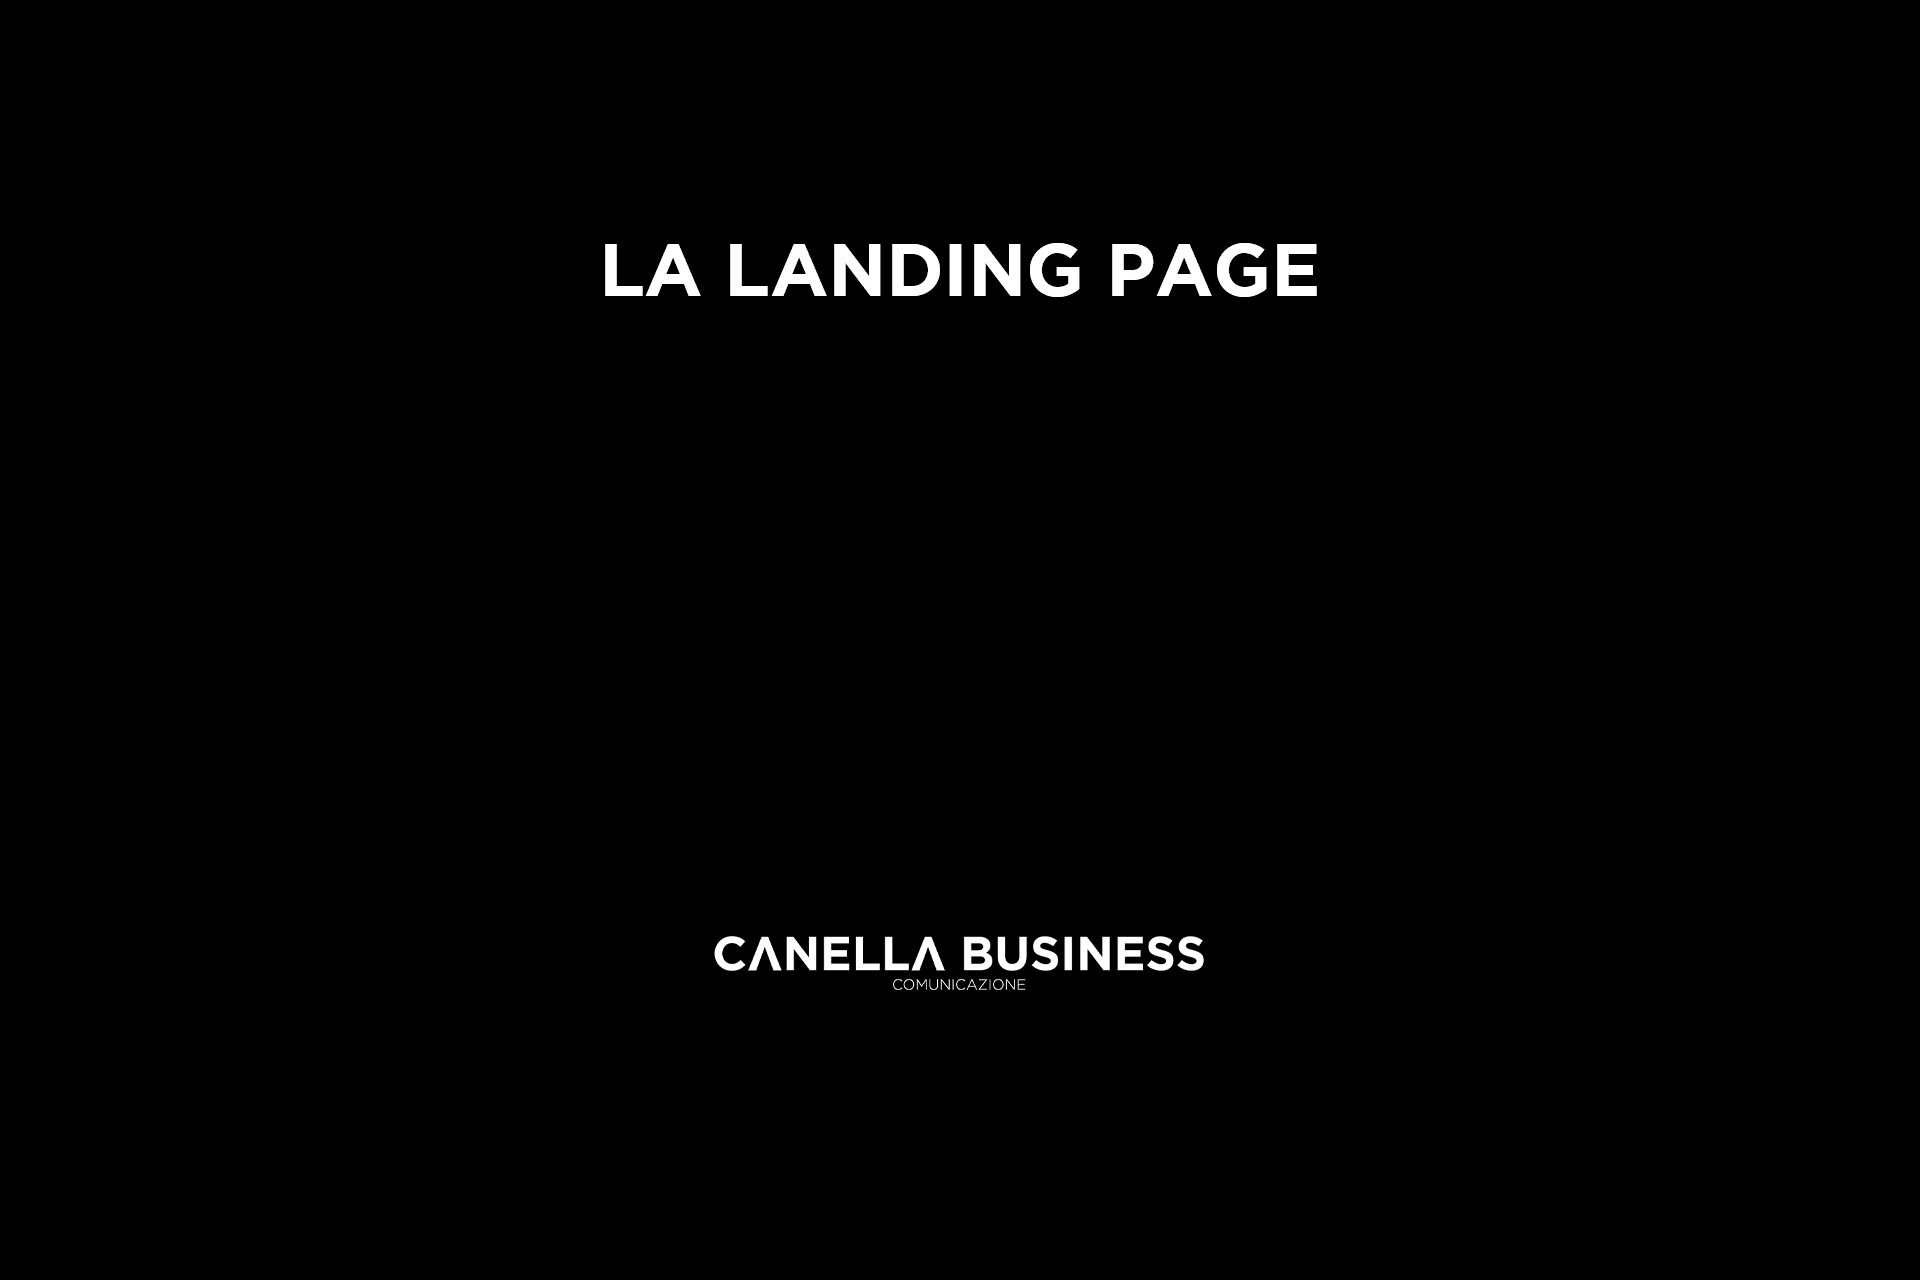 La landing page